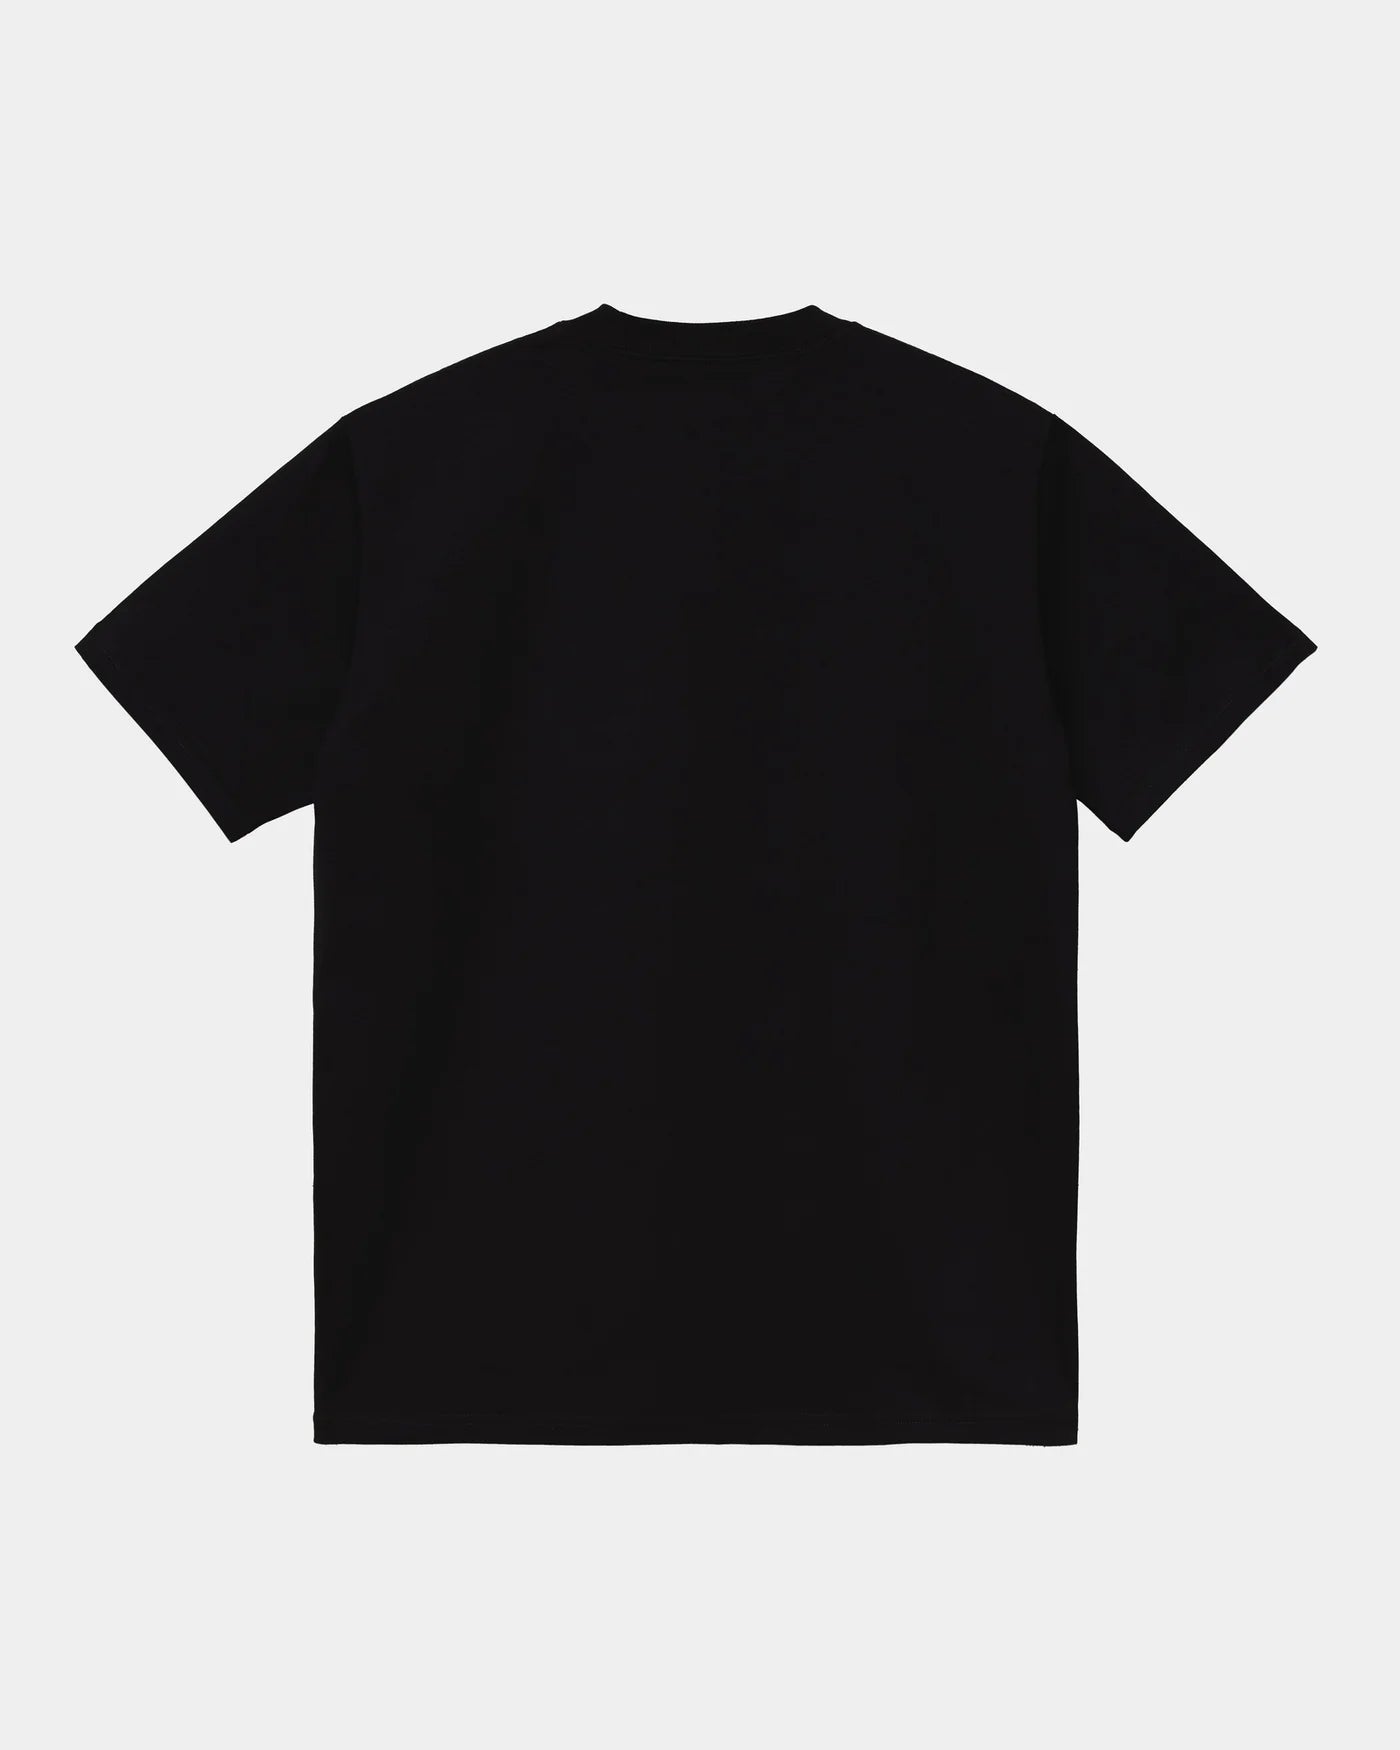 S/S University T-Shirt (Black / White)